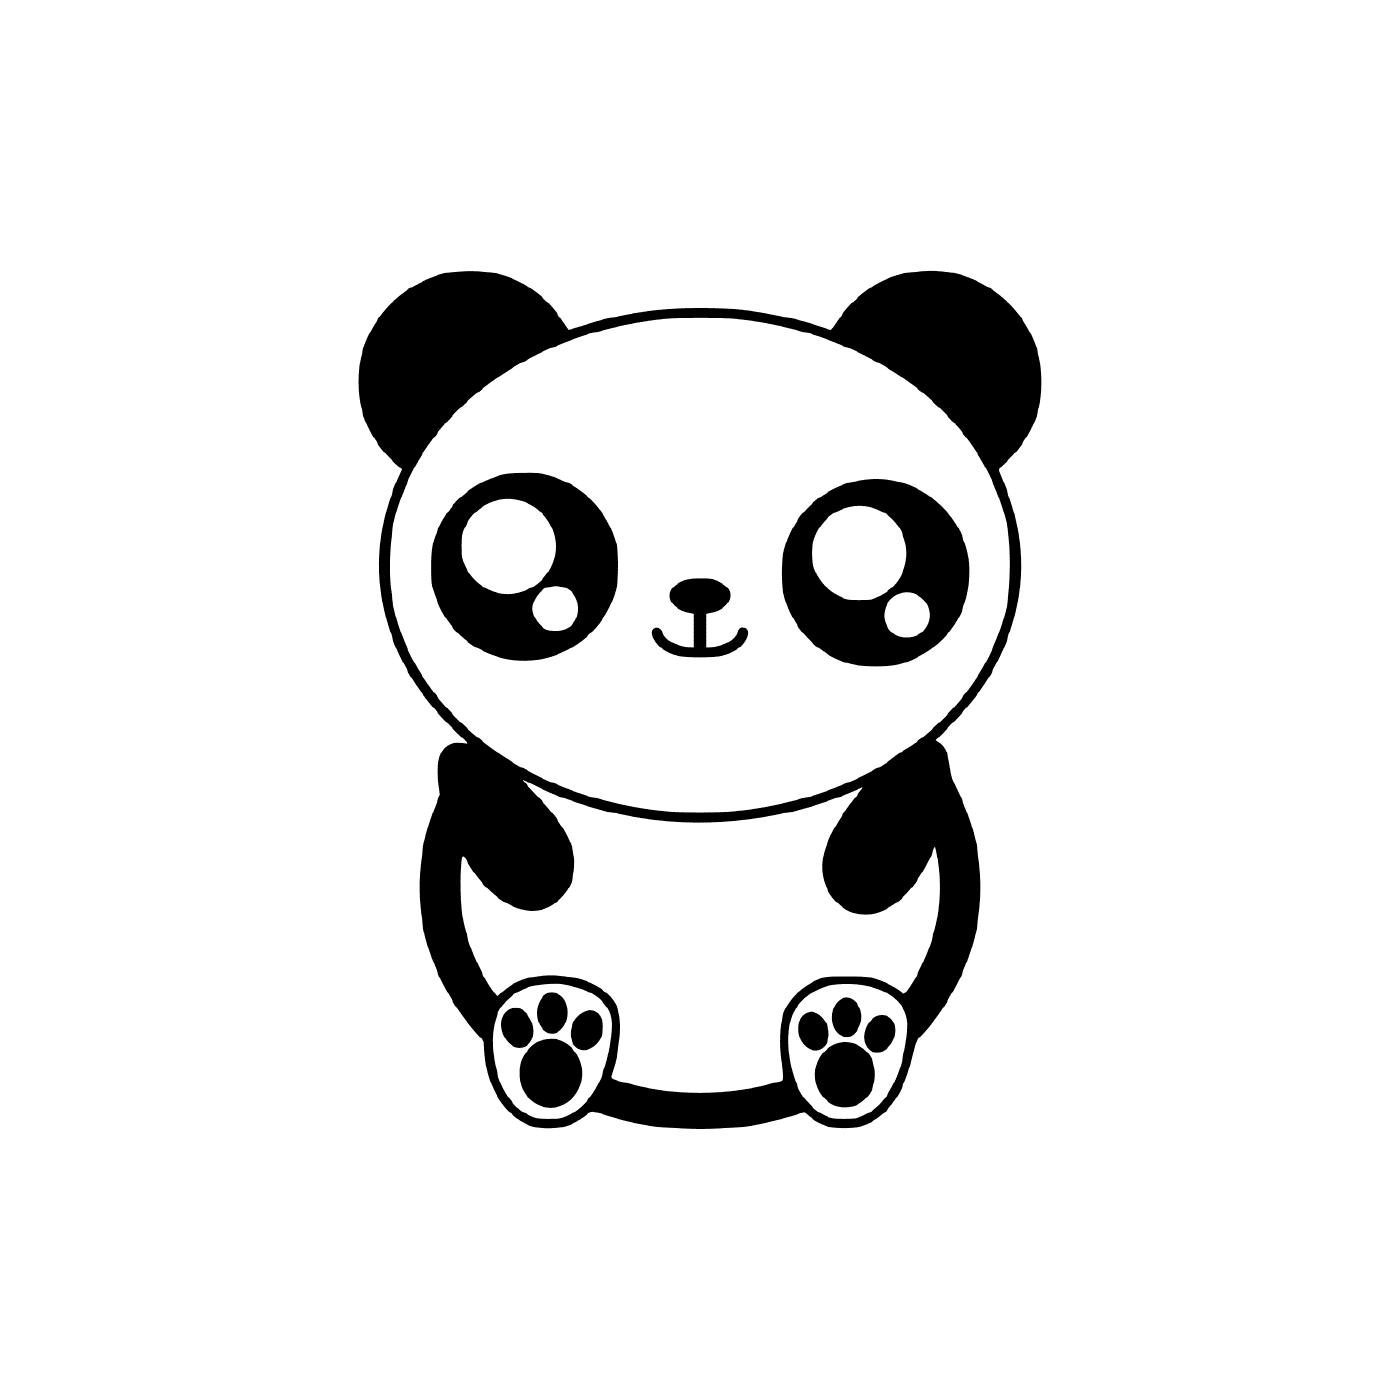  sweet adorable panda 